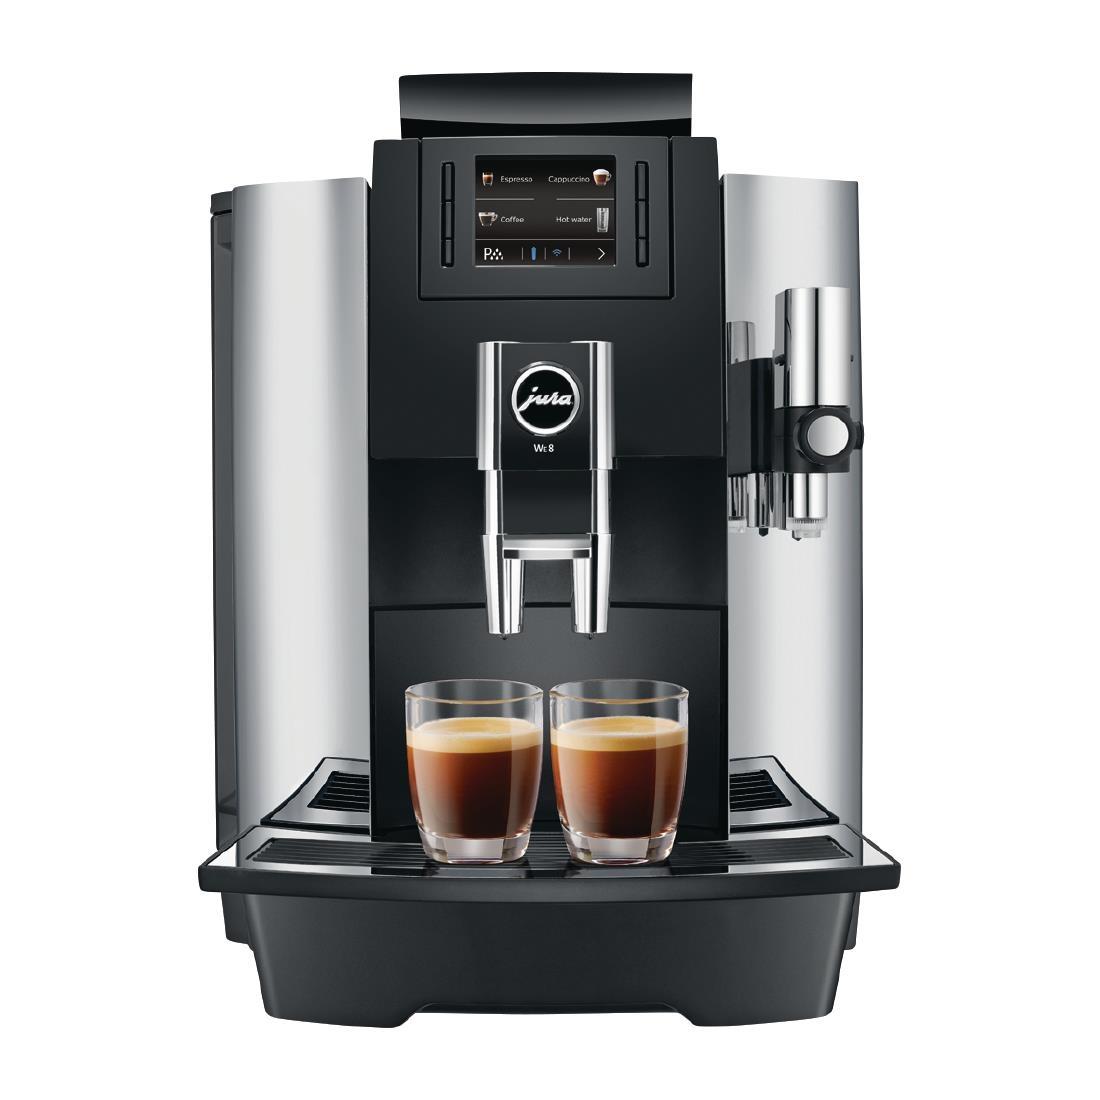 Jura WE8 Bean to Cup Coffee Machine 15285 - FE748  - 2